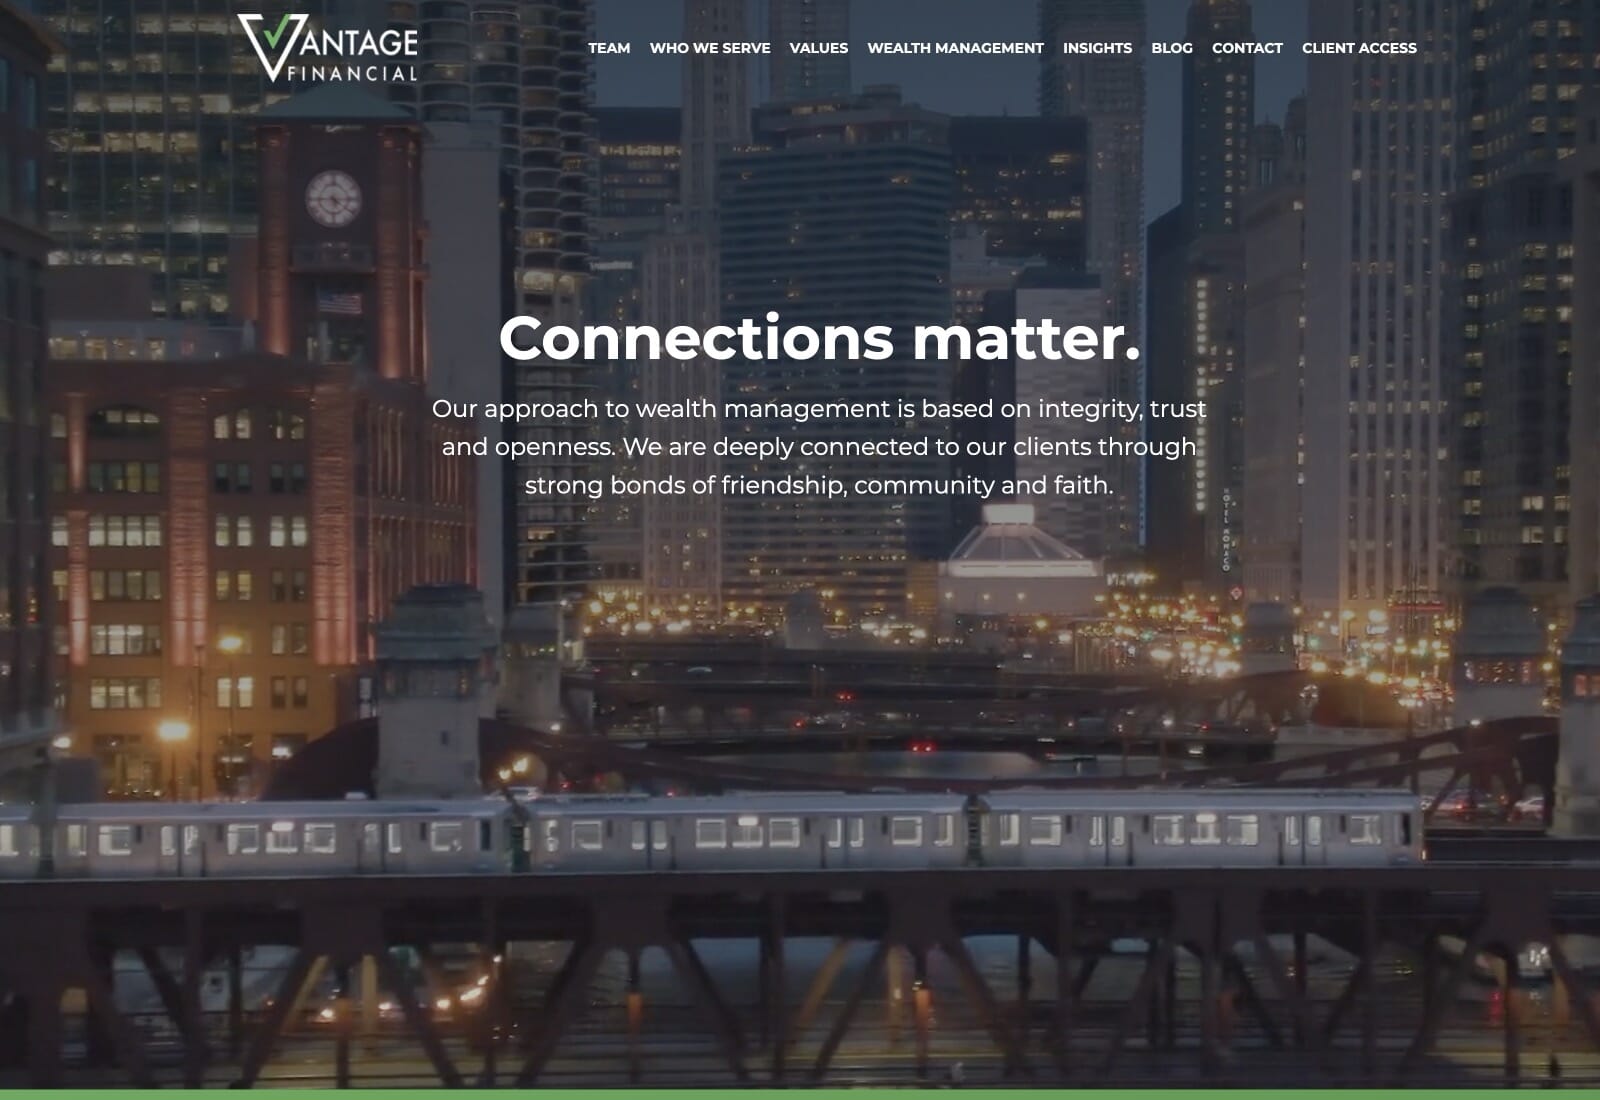 Vantage Financial website screenshot